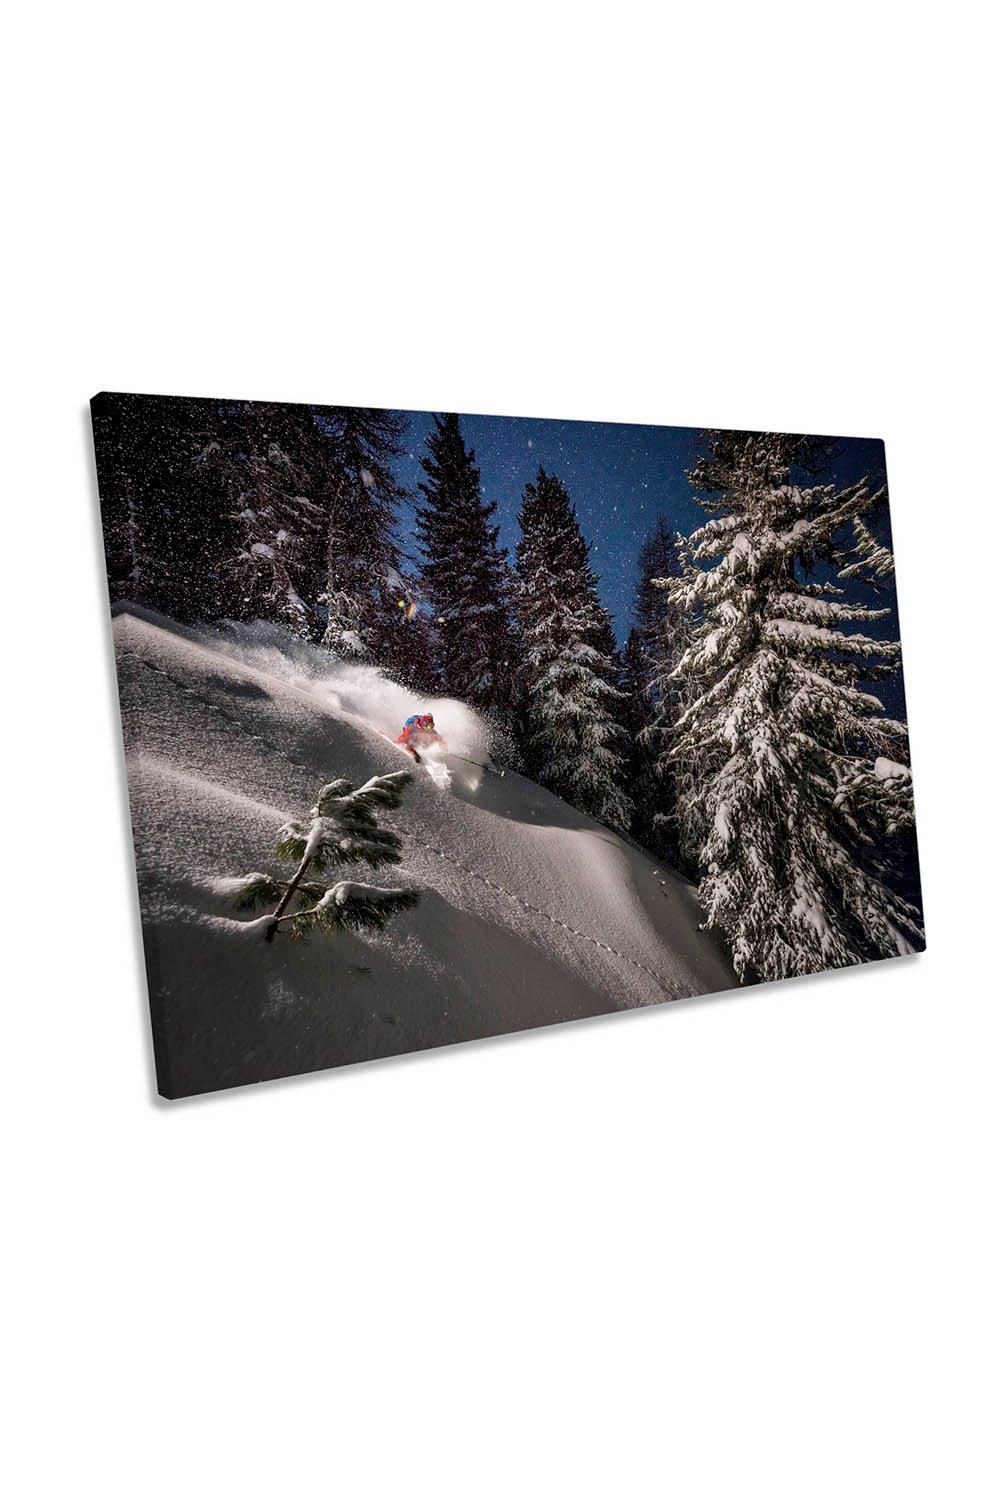 Night Powder Skiing Ski Sports Snow Canvas Wall Art Picture Print